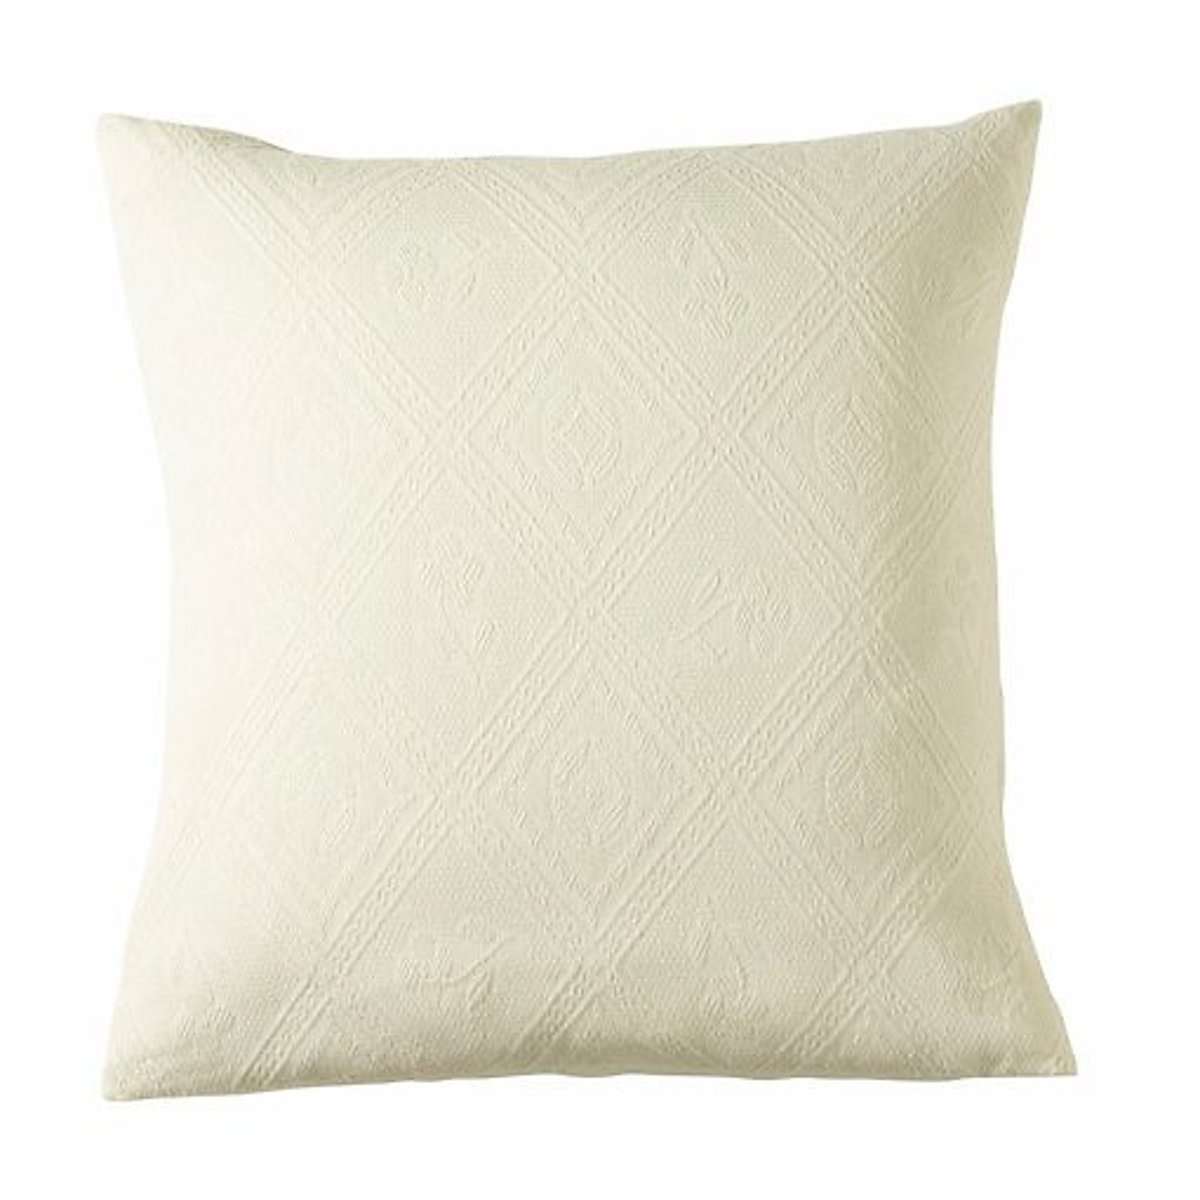 Чехол La Redoute На подушку или наволочка из хлопковой жаккардовой ткани INDO 65 x 65 см белый, размер 65 x 65 см - фото 1